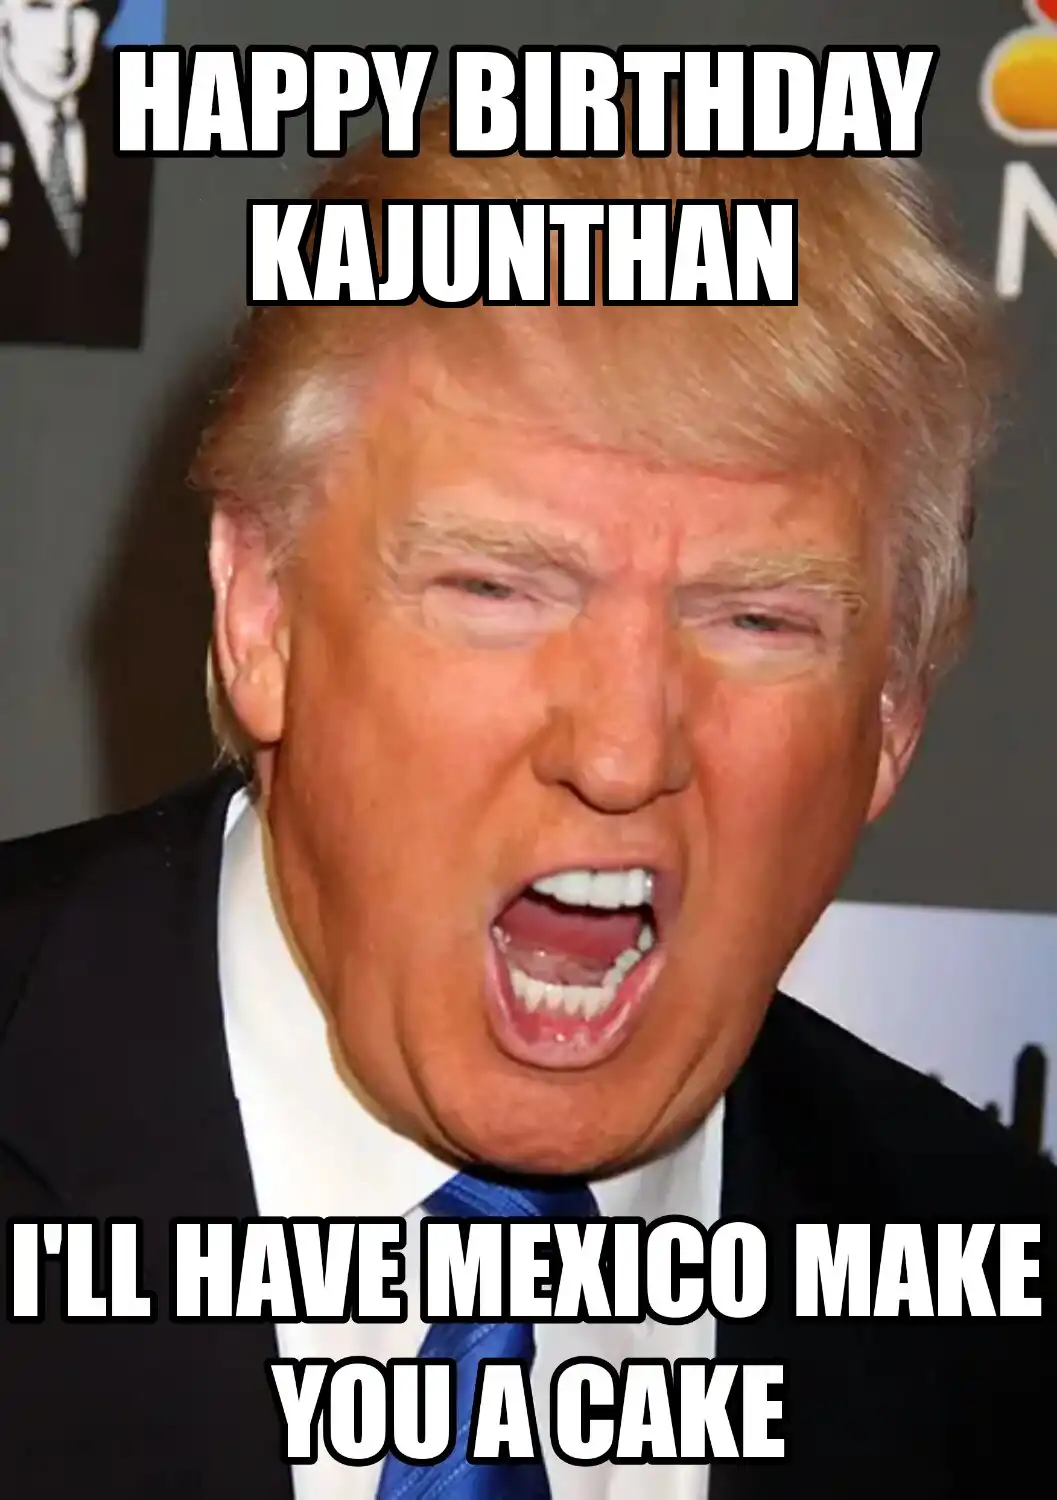 Happy Birthday Kajunthan Mexico Make You A Cake Meme